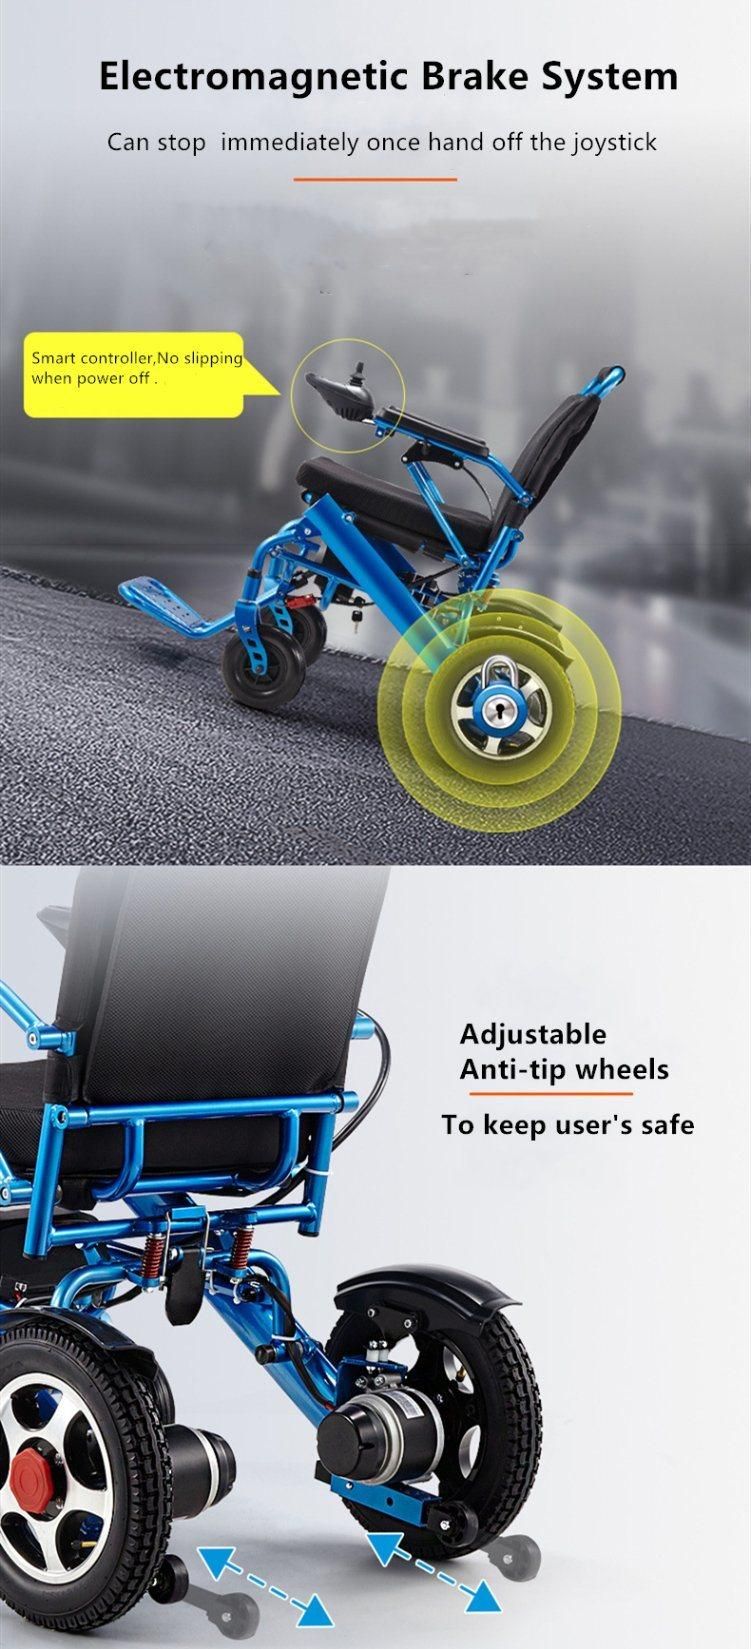 Aluminium Light Folding Portable Electric Wheelchair